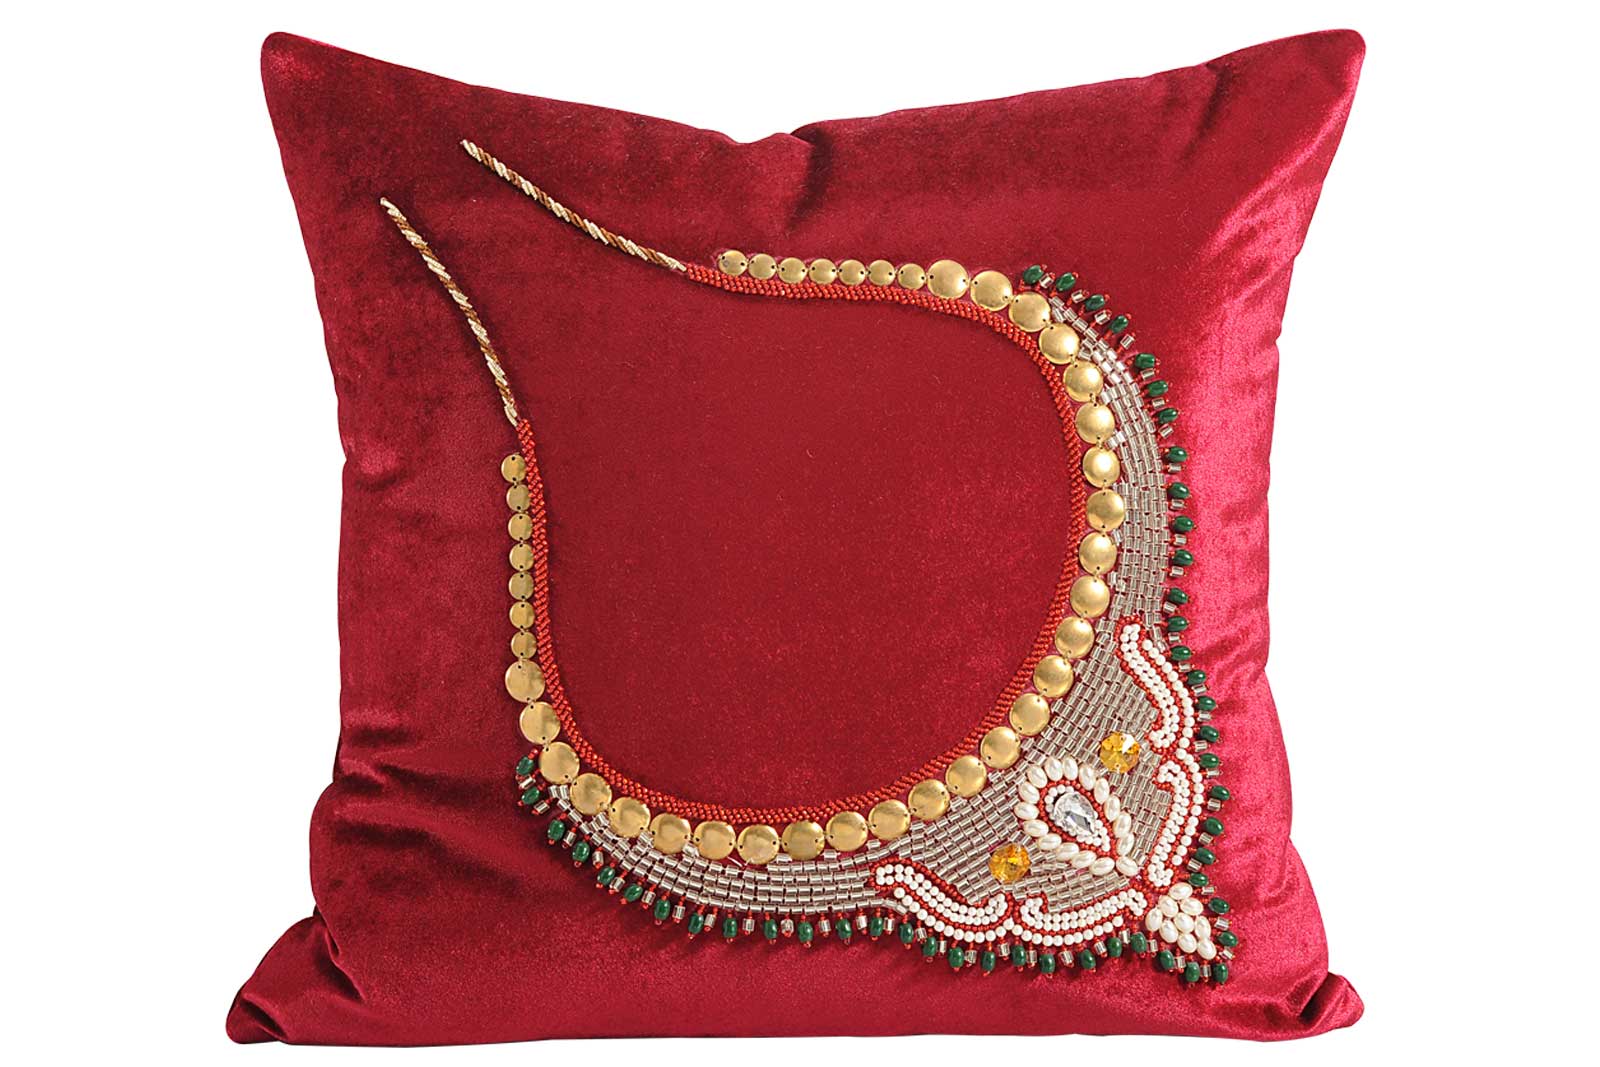 Embroidery ornament cushion